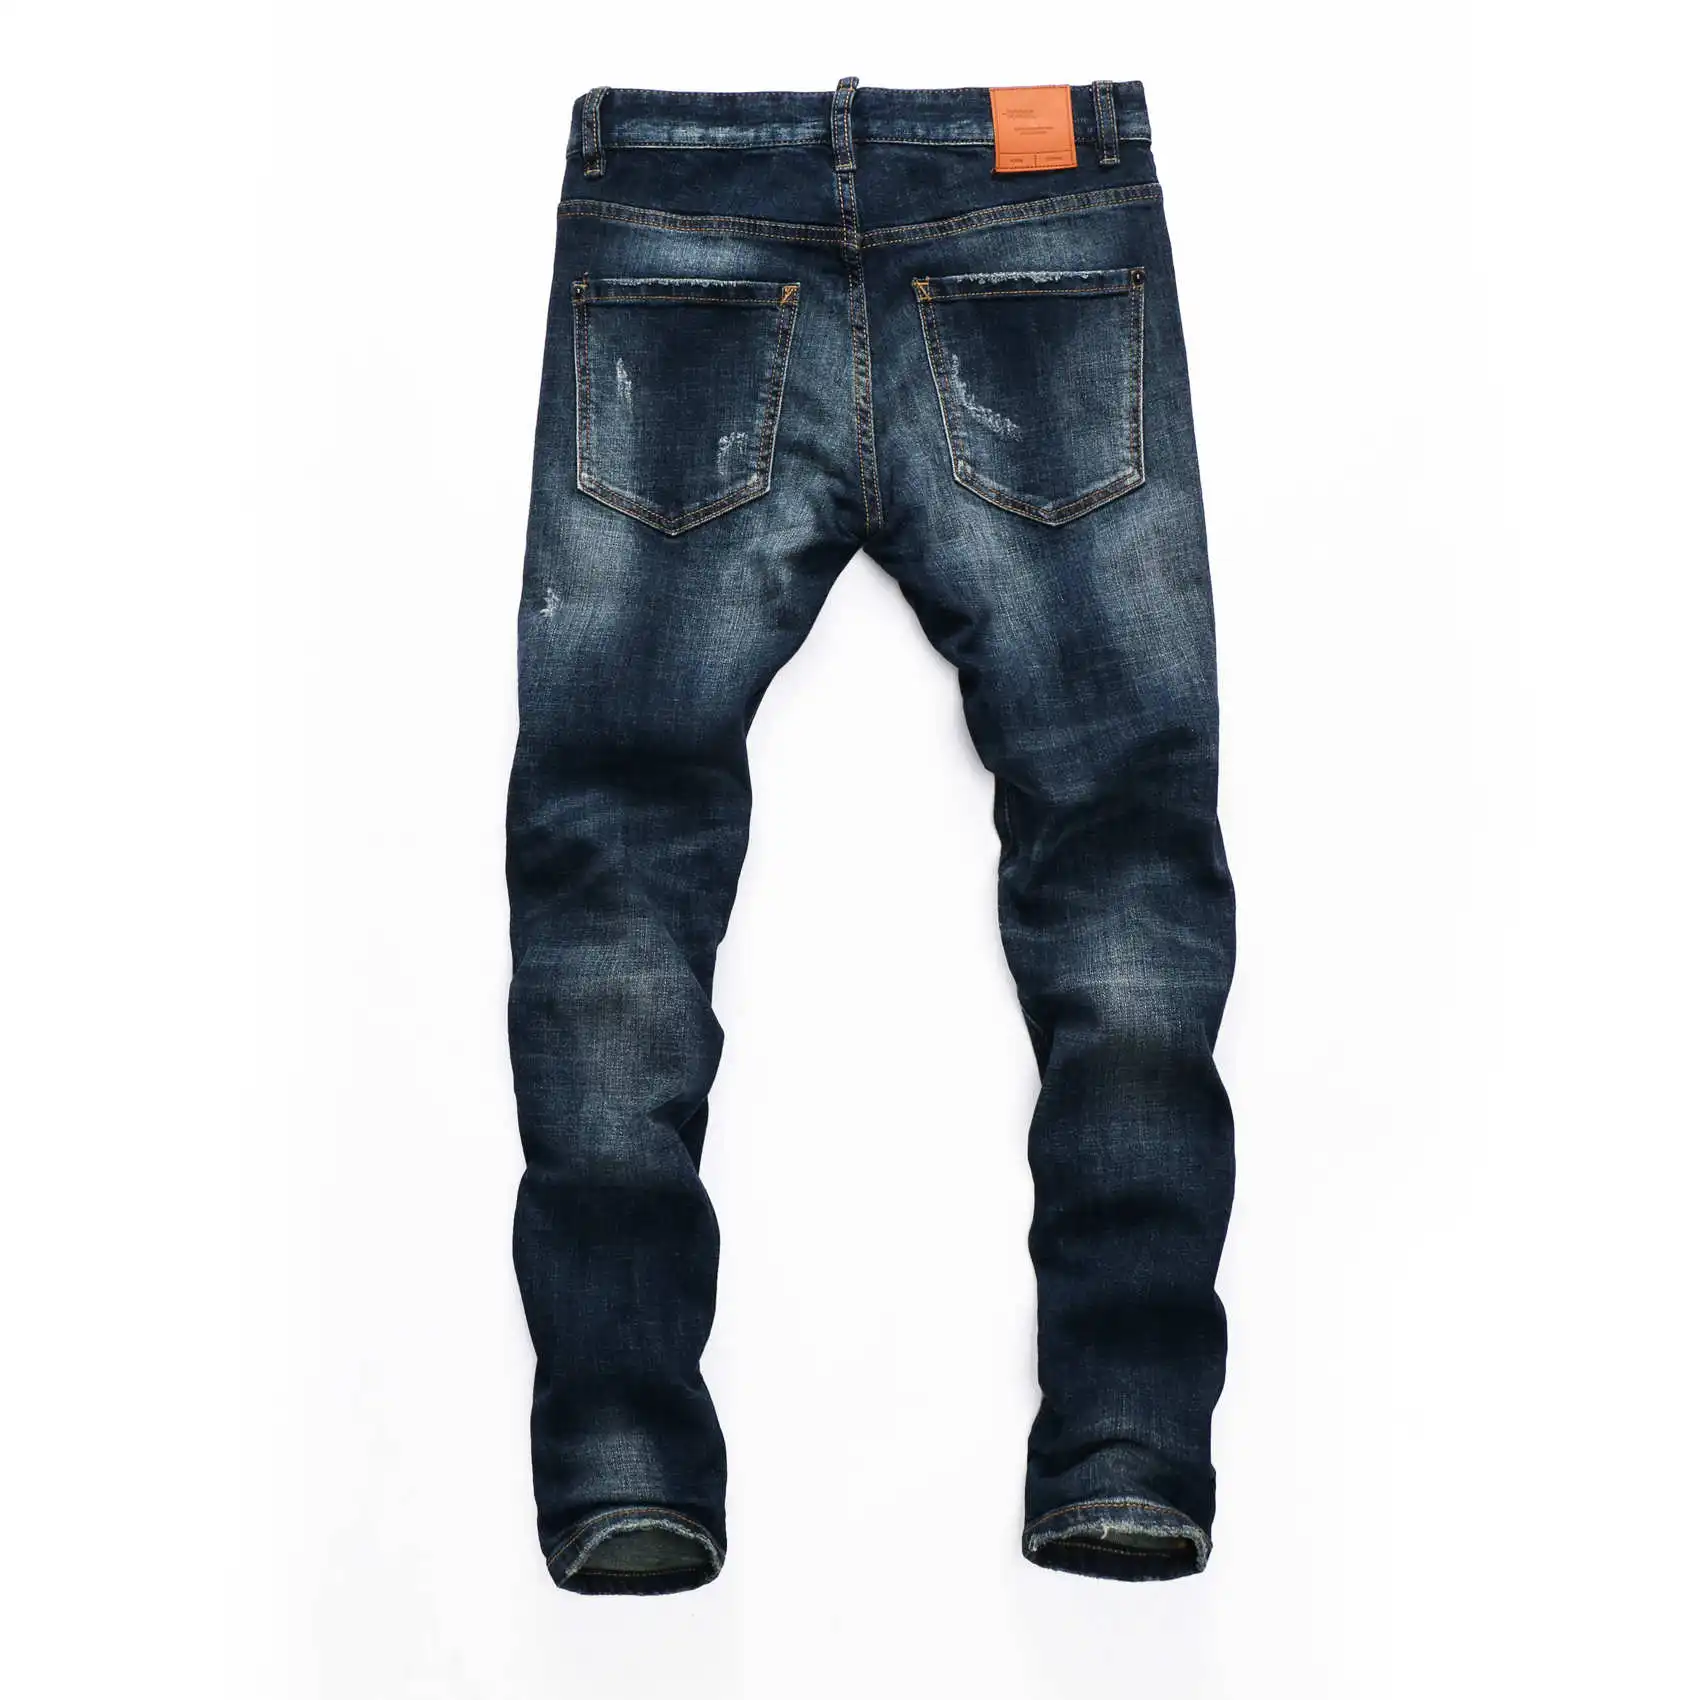 Dsq blugi de brand European dsq blugi, pantaloni Barbati Slim blugi denim pantaloni butonul albastru gaura Creion Pantaloni jeans pentru bărbați